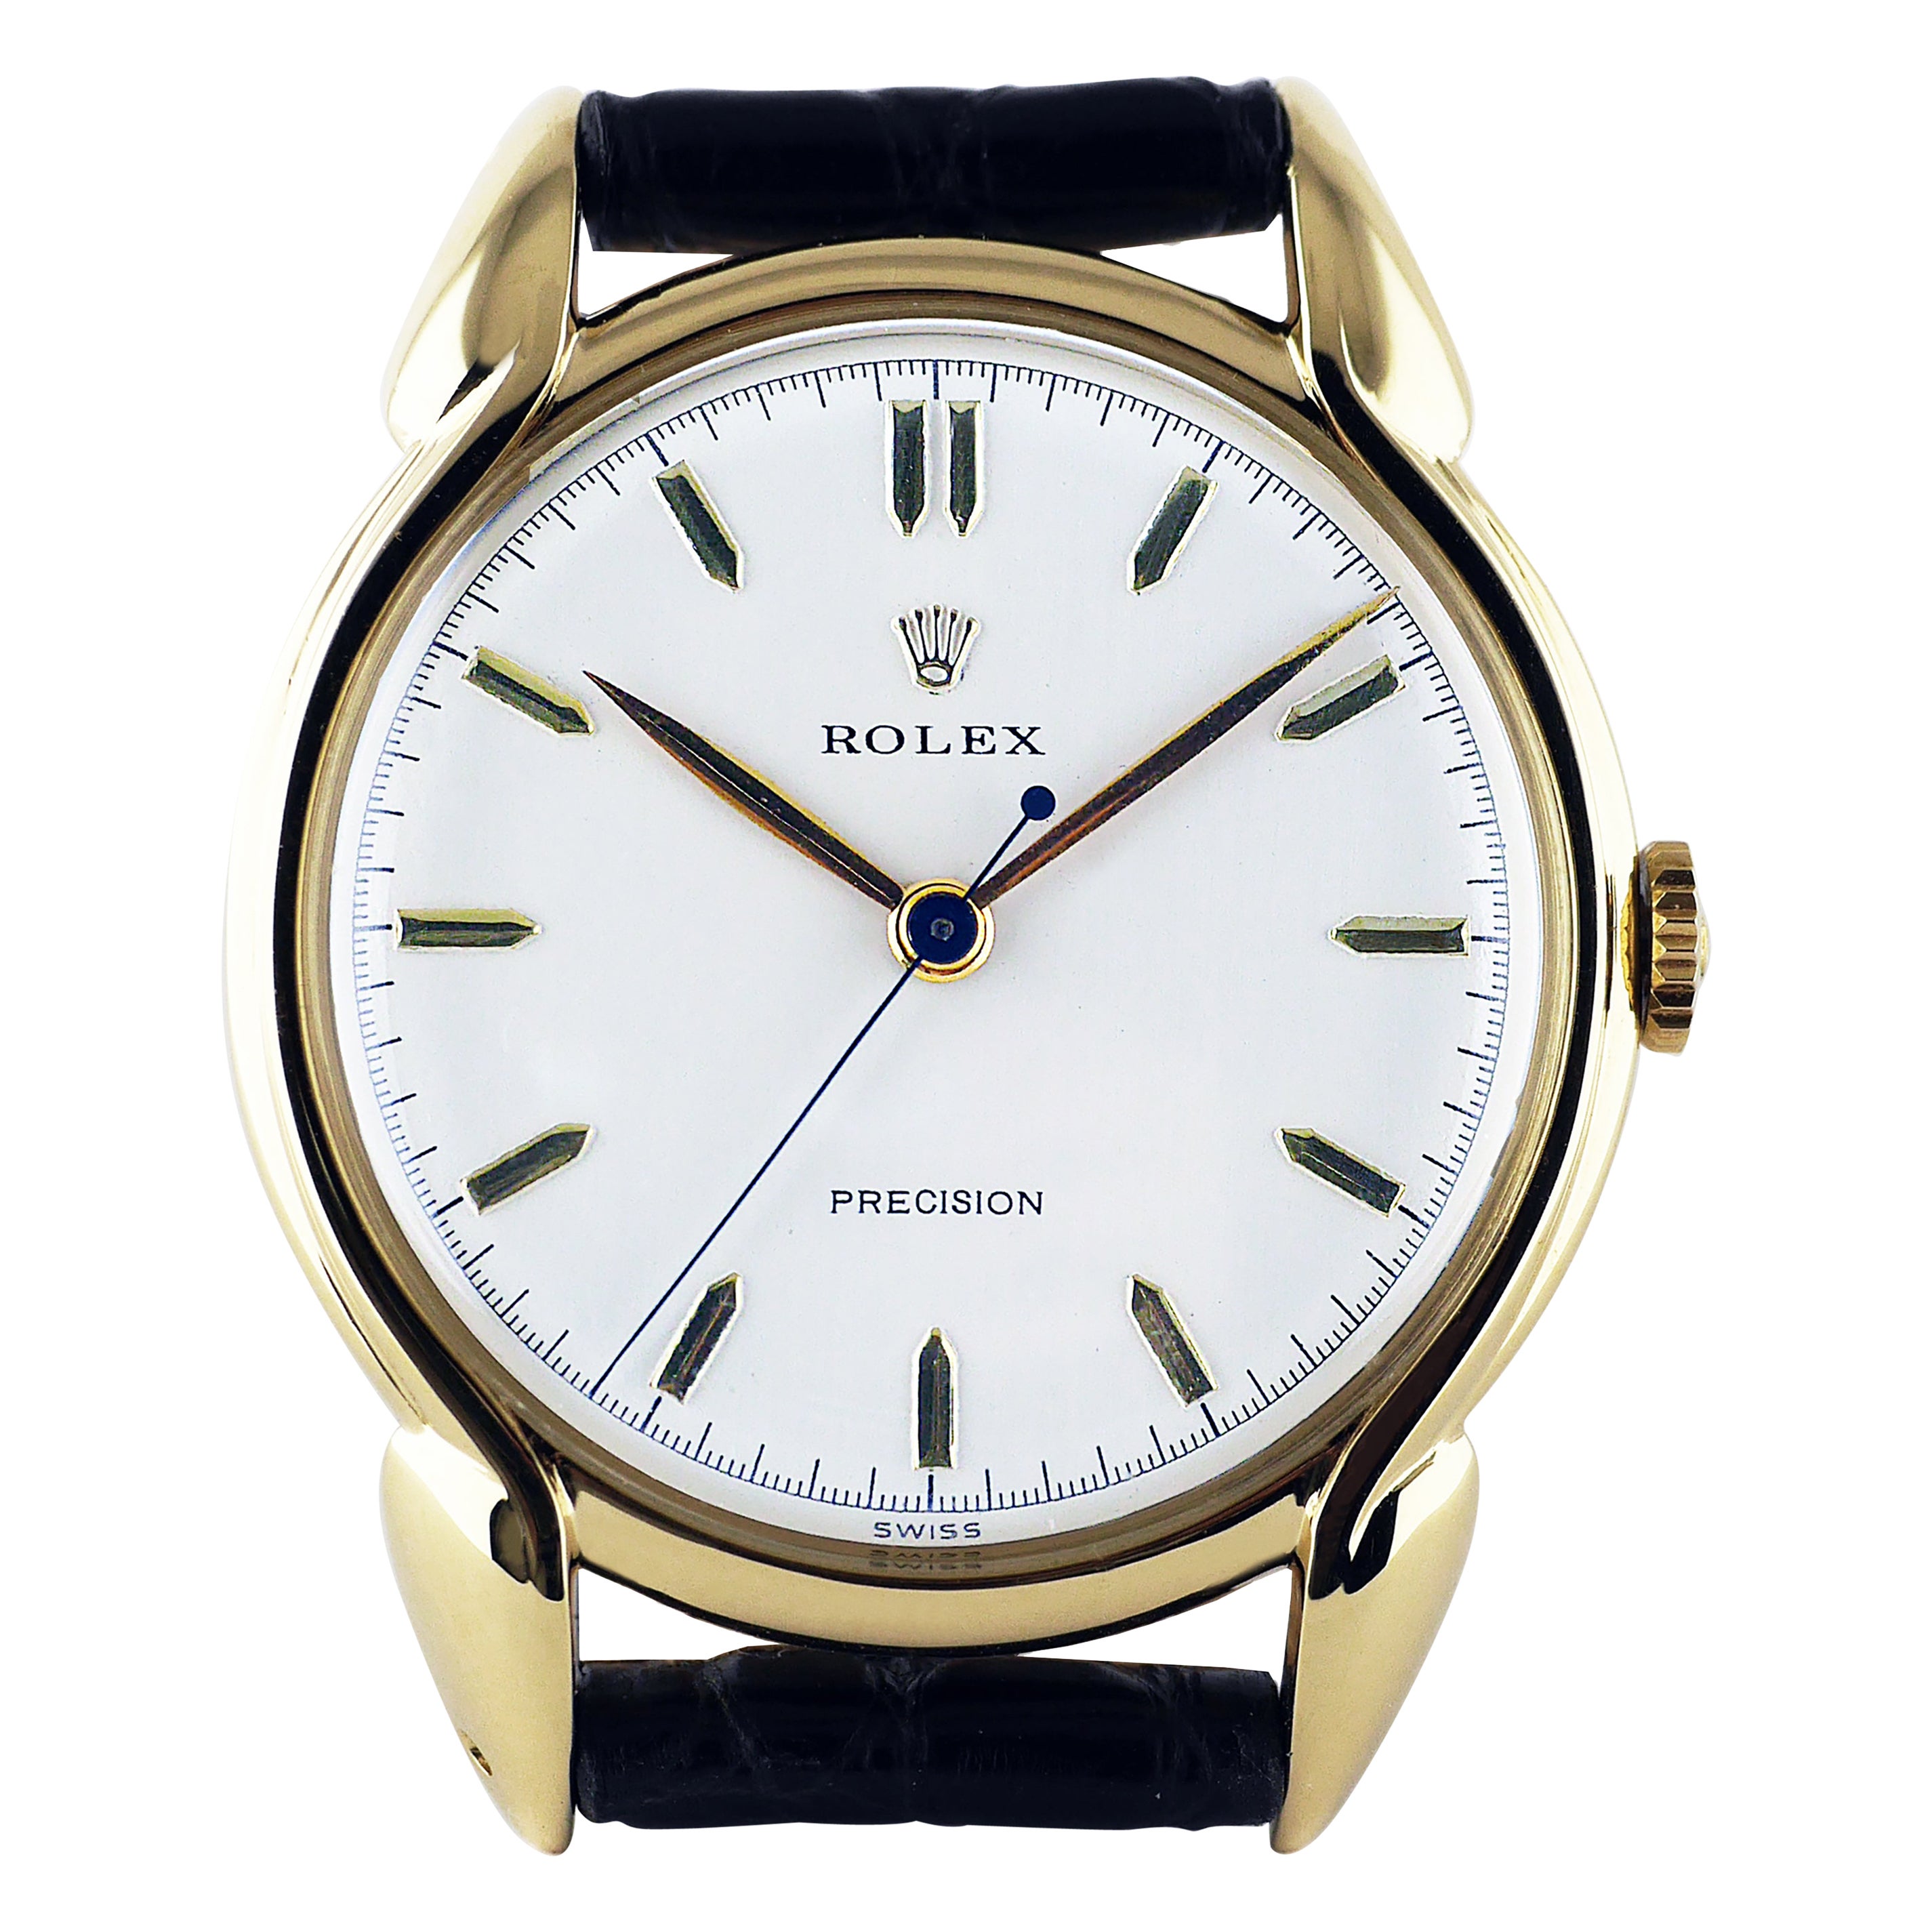 Rolex Precision Gold Wristwatch c1940